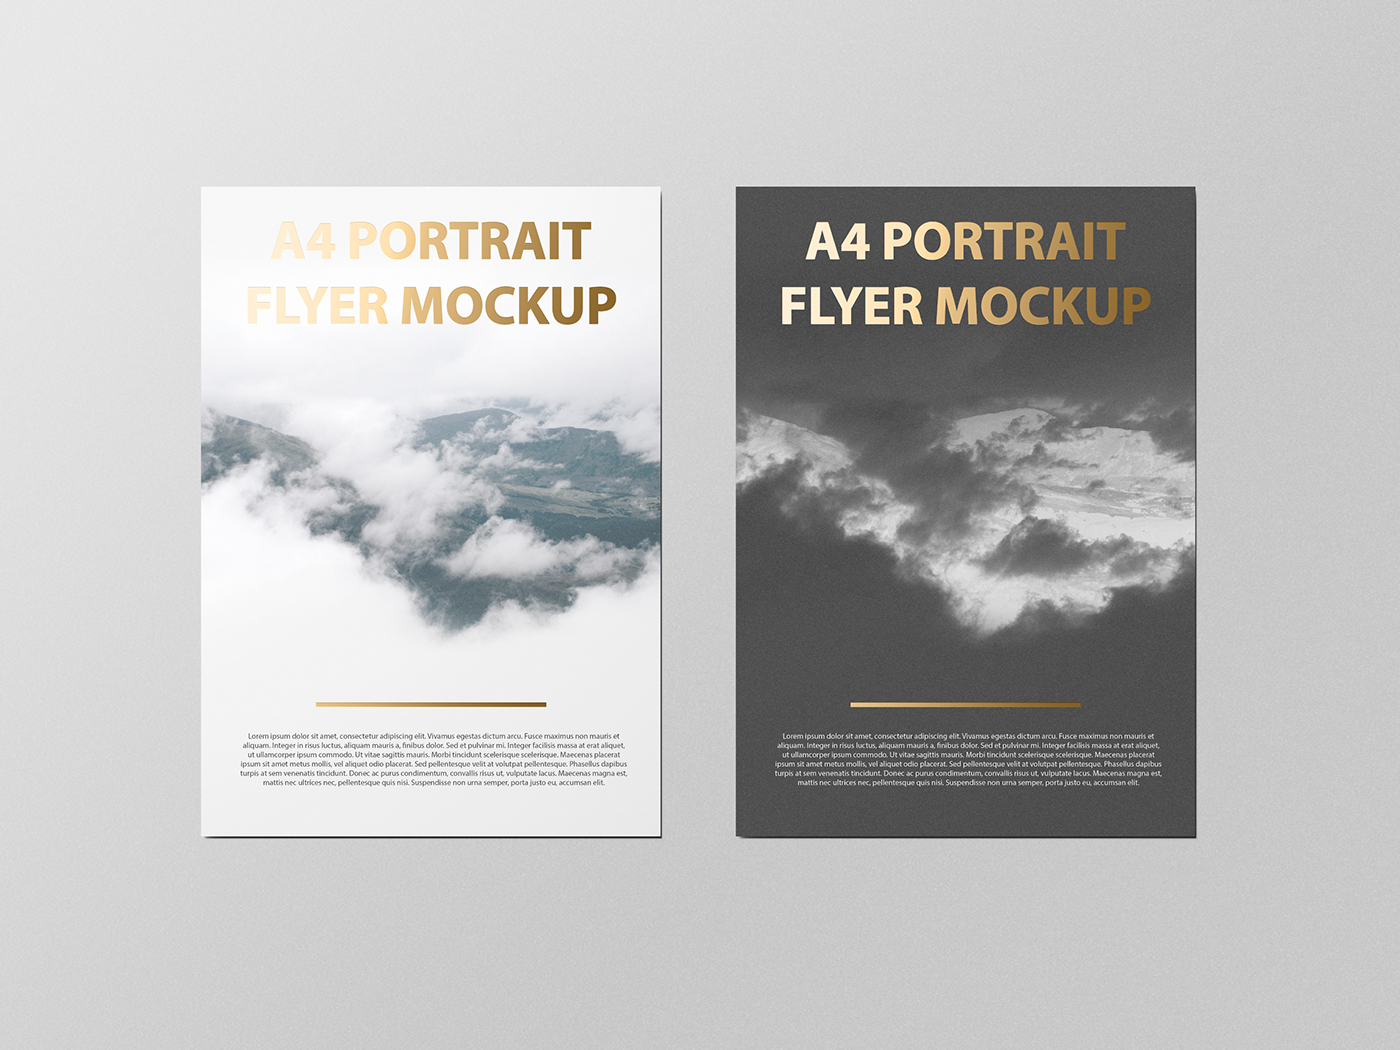 Mockup a4 flyer poster portrait paper product print showcase mock-up